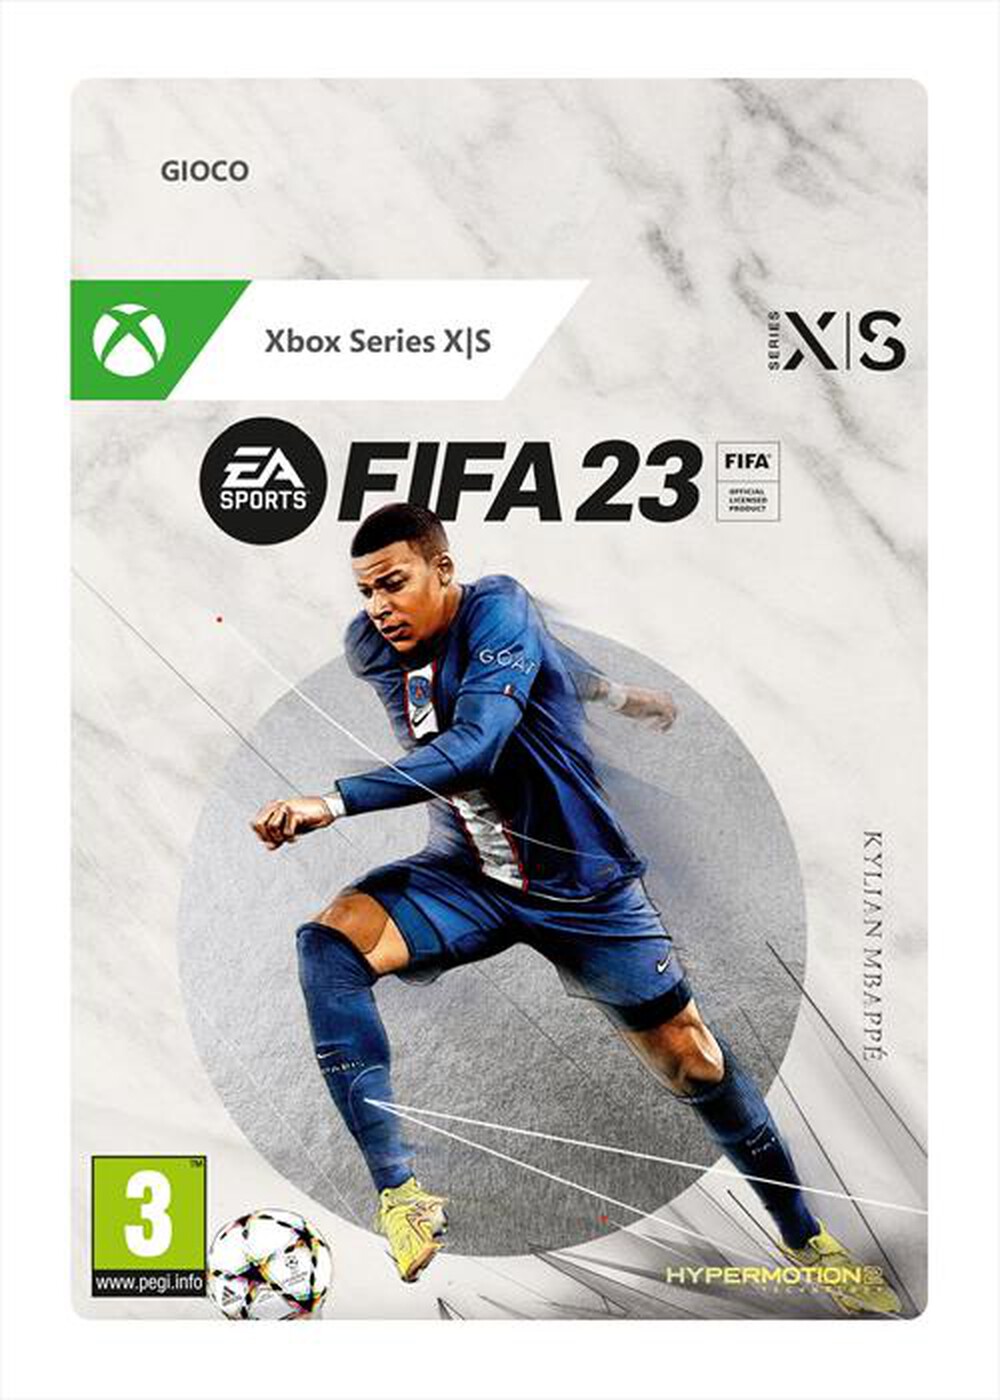 "MICROSOFT - FIFA 23 STANDARD EDITION Xbox Series XS"